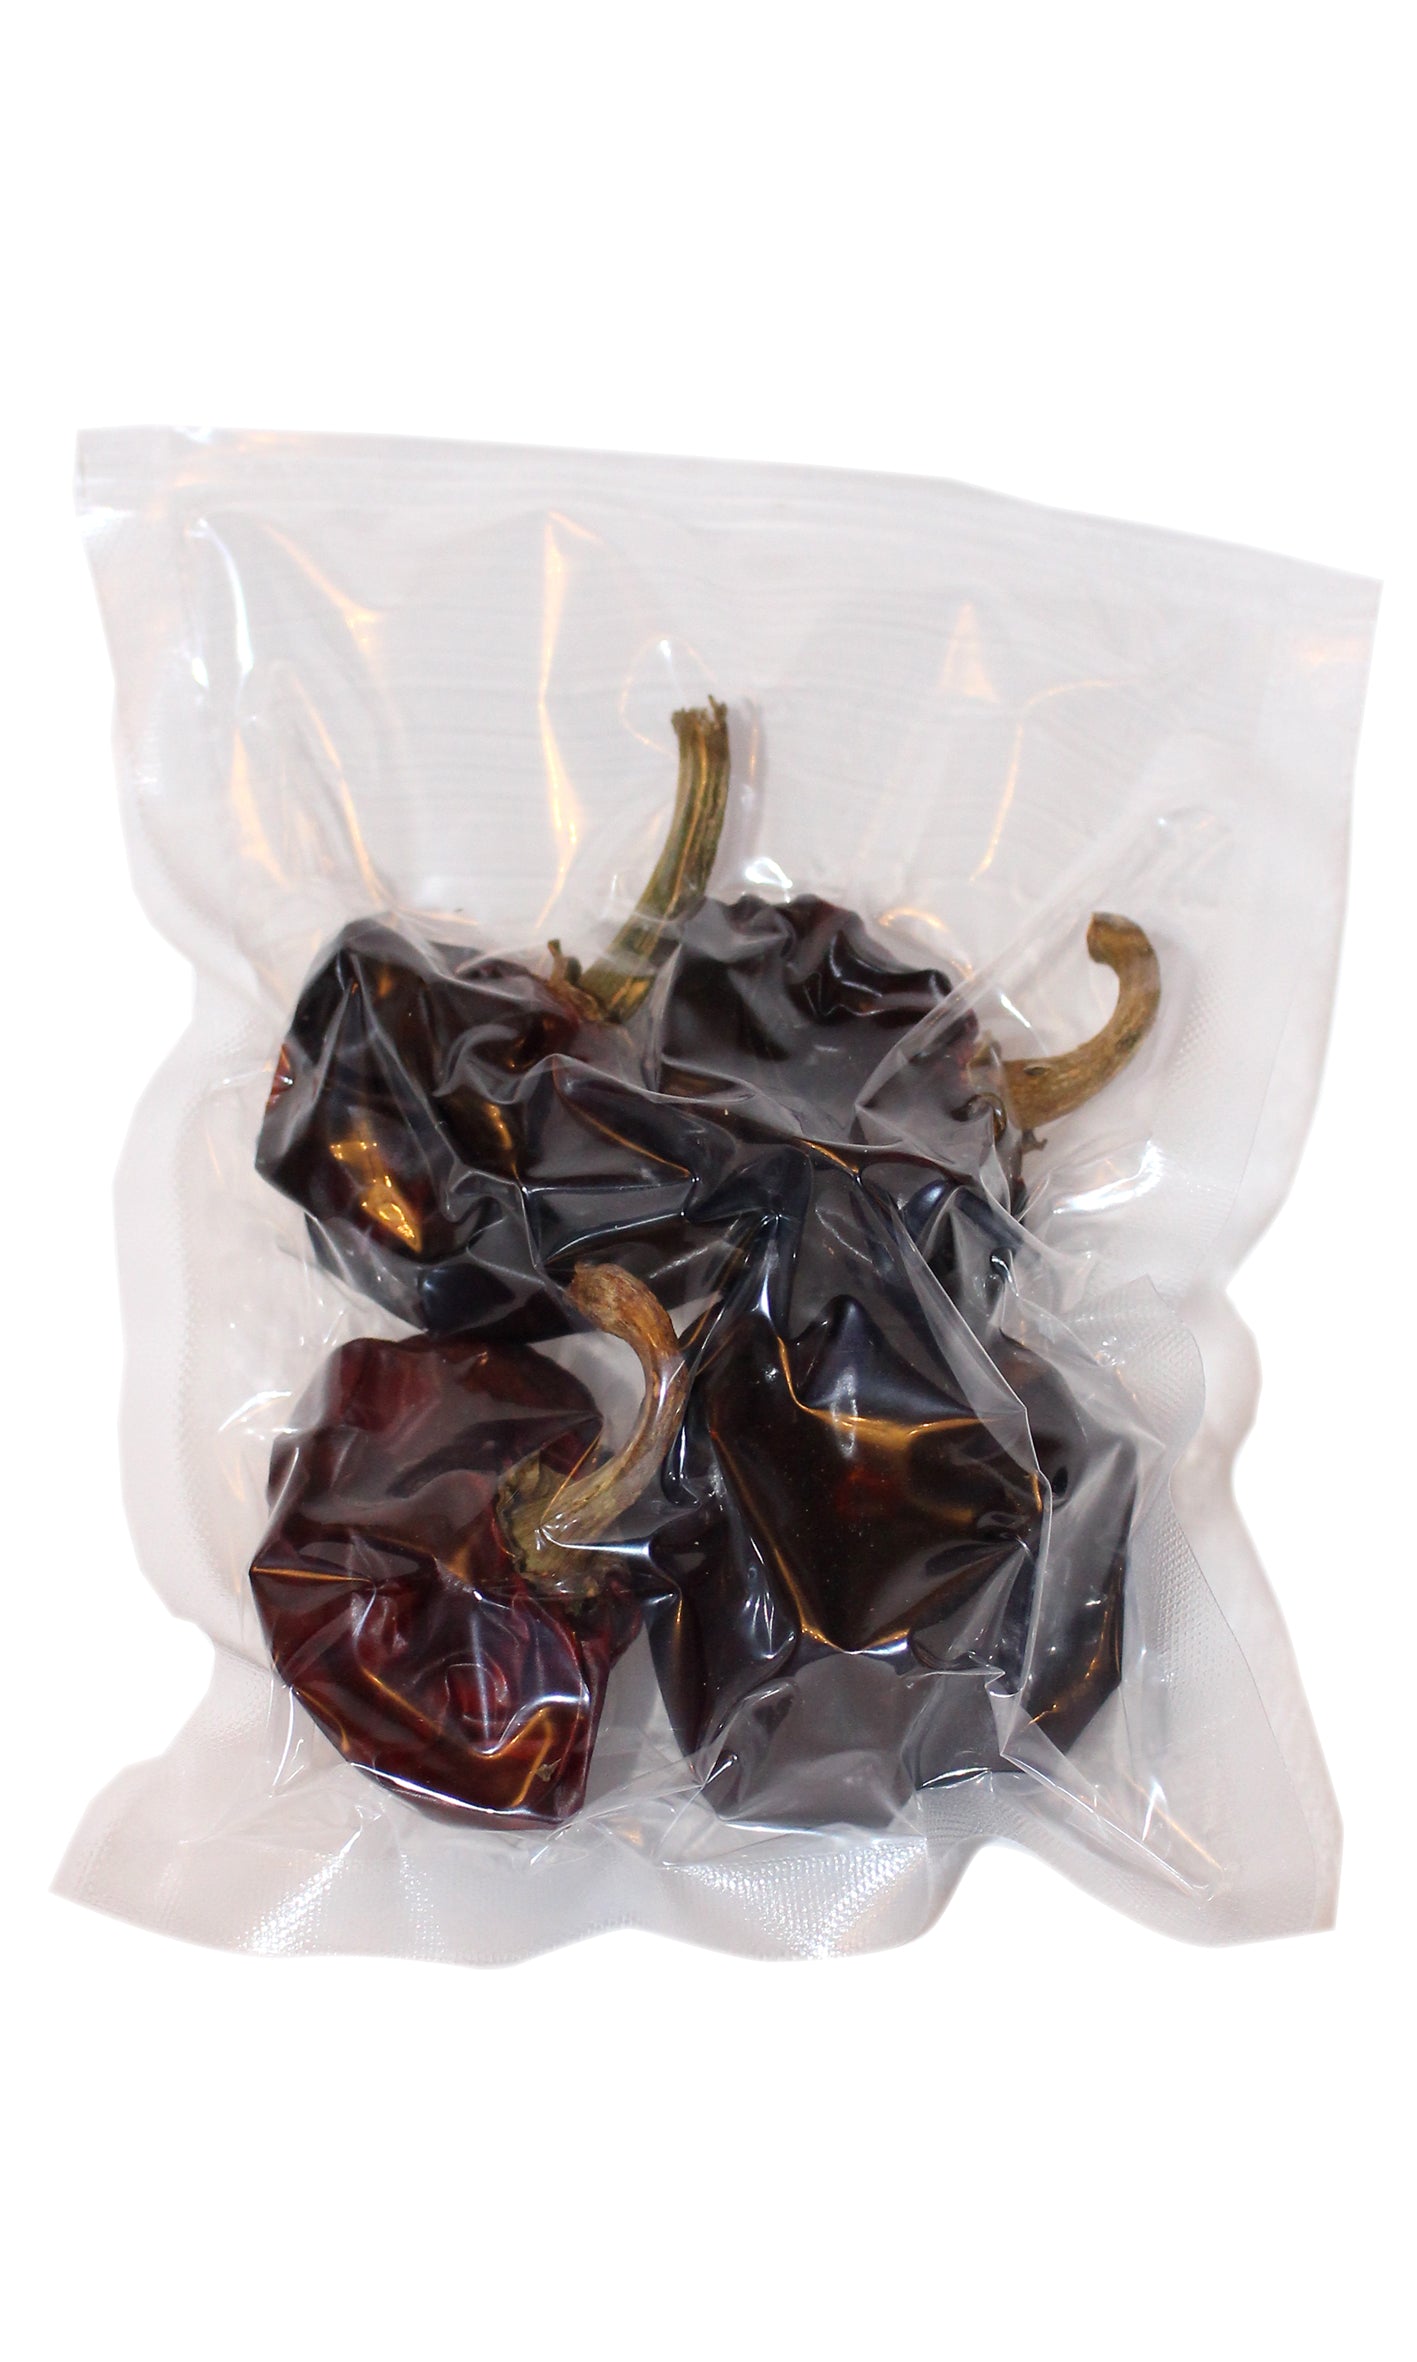 Dried Spanish Nora pepper - 4 pack